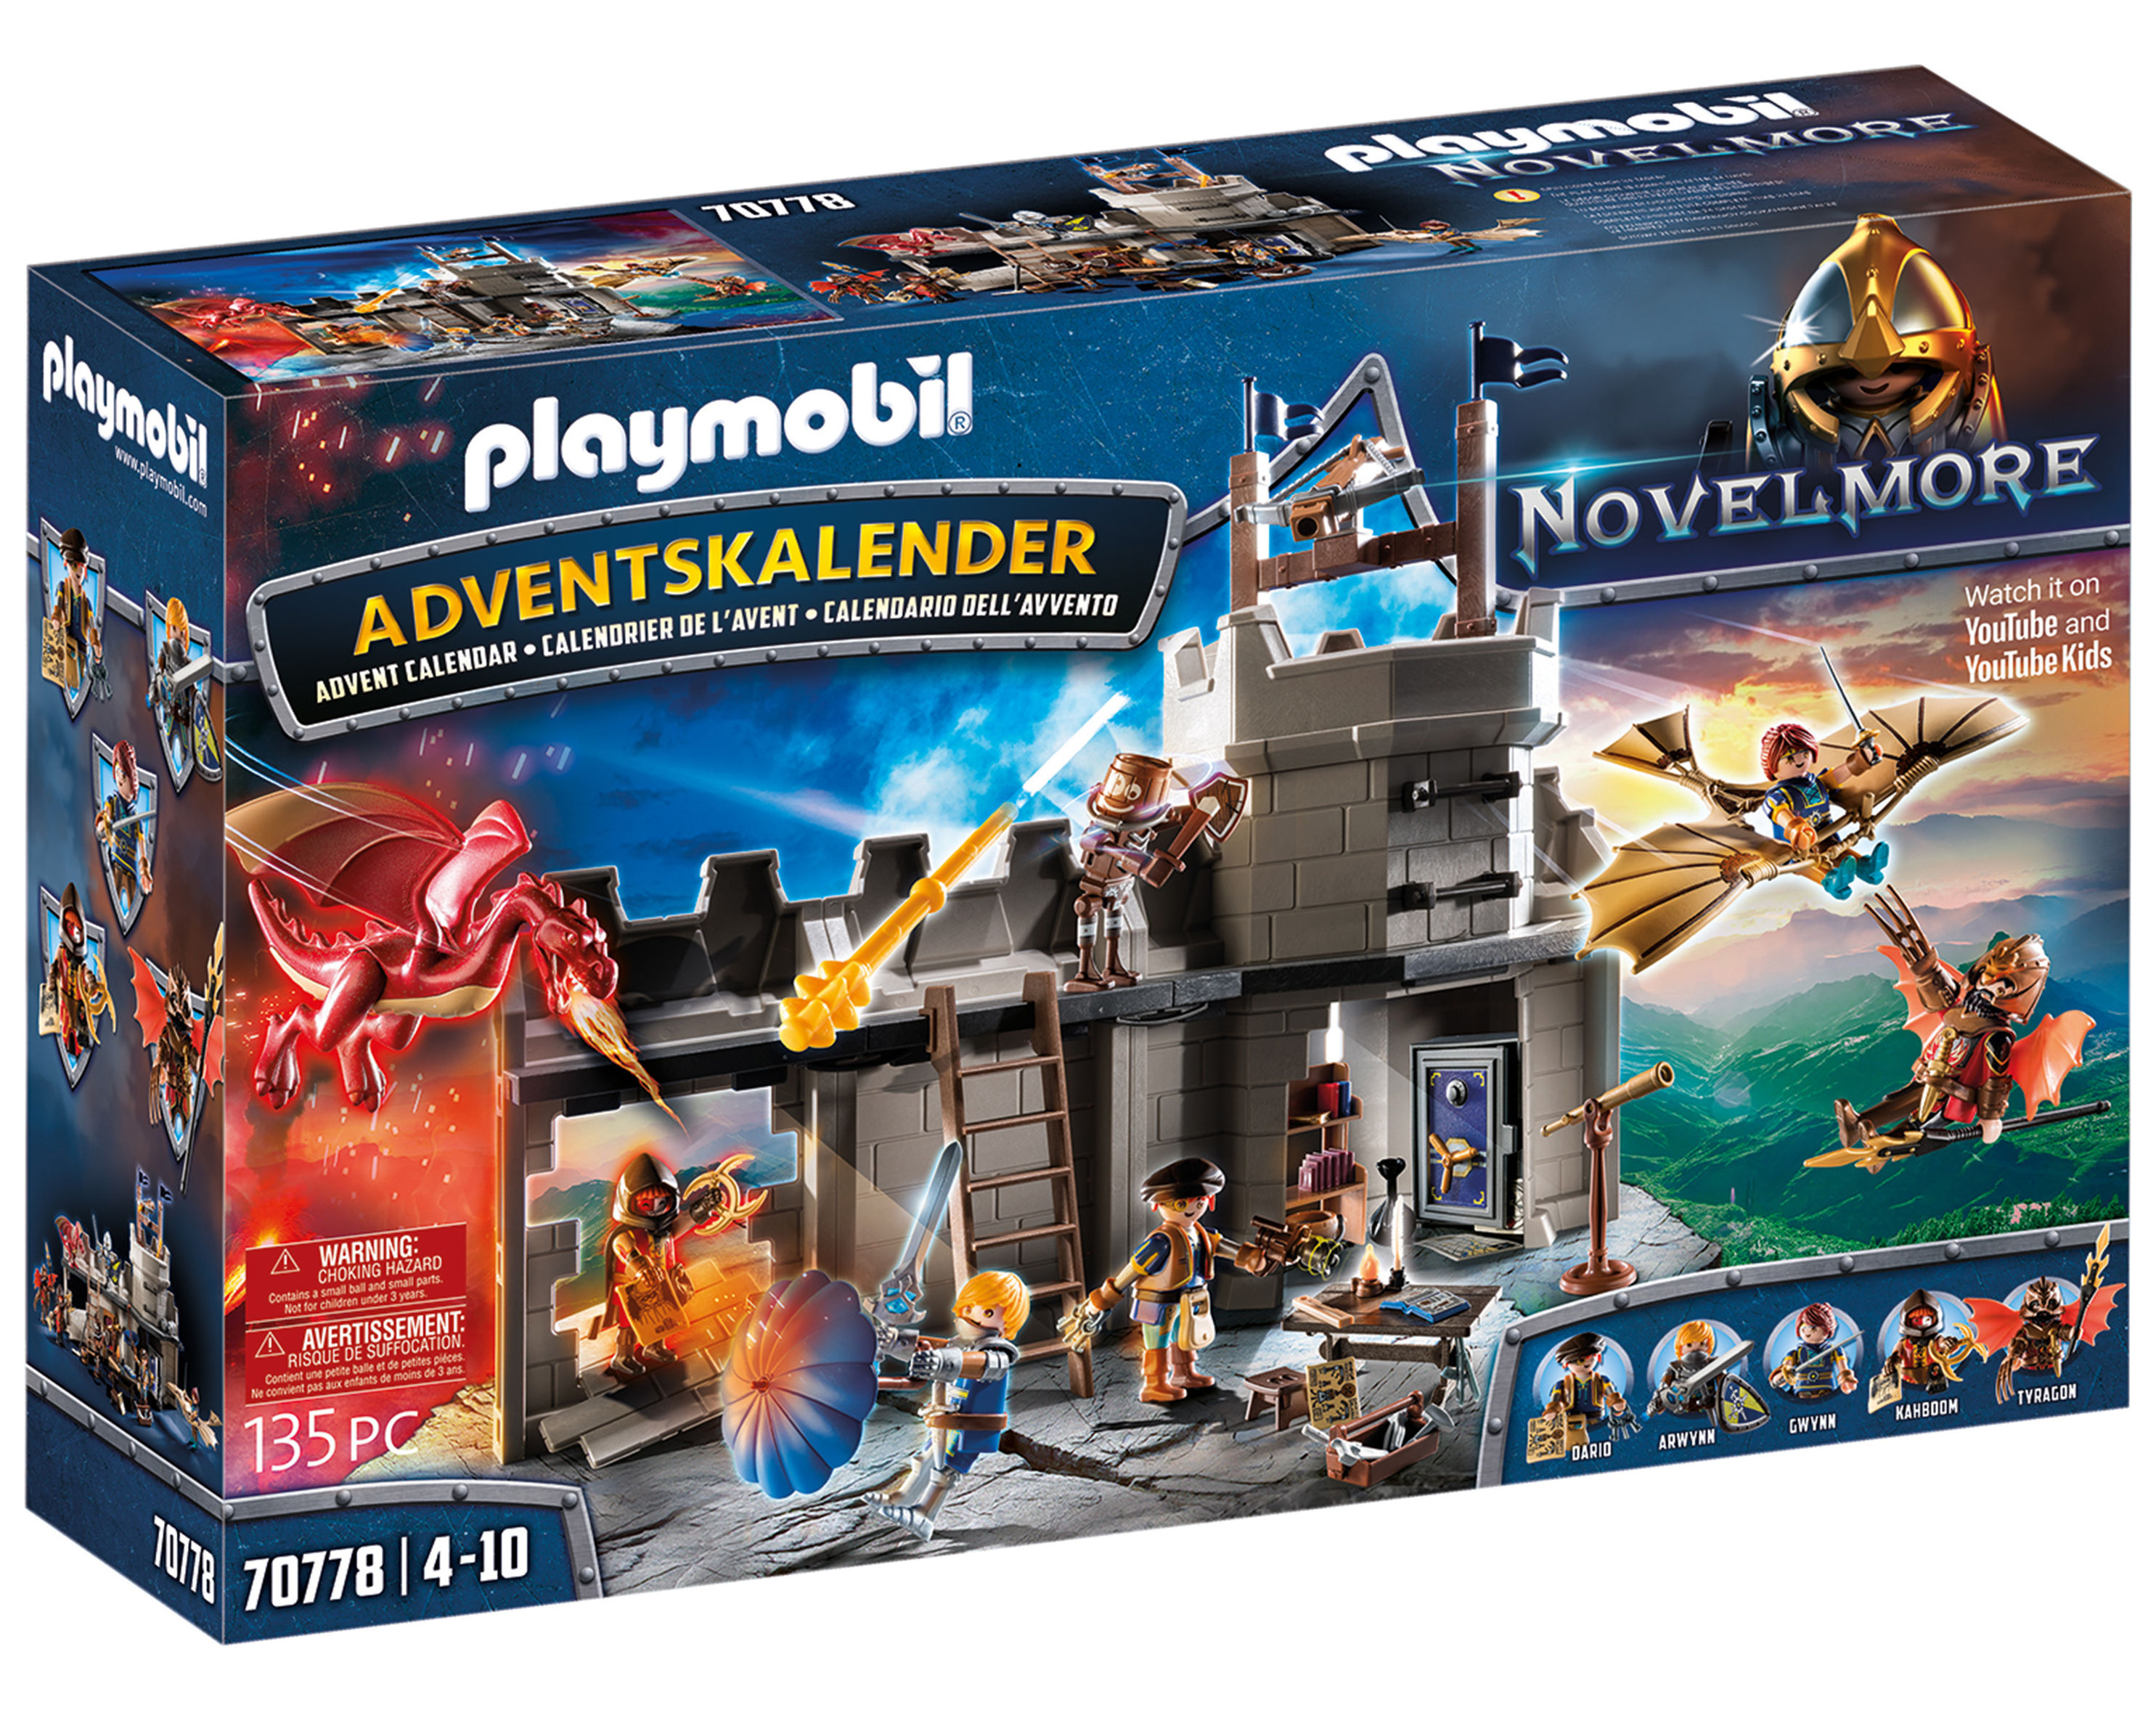 PLAYMOBIL® Adventskalender 70778 Novelmore kaufen